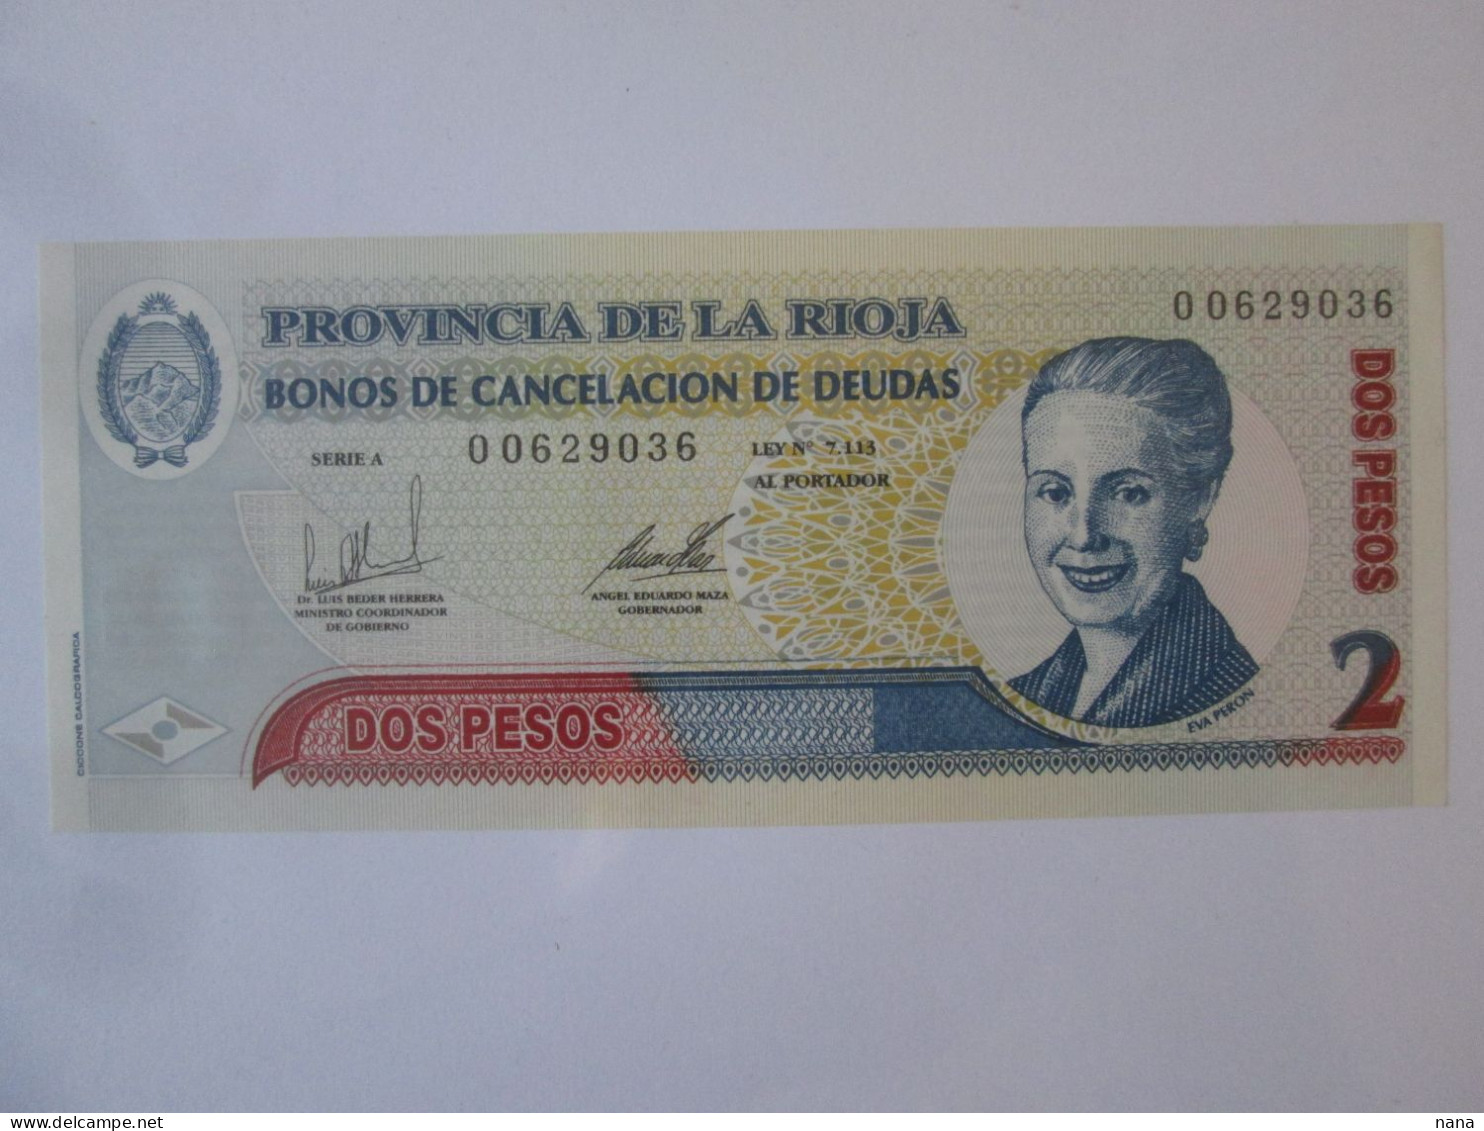 Rare! Argentina 2 Pesos 2003 Province La Rioja Banknote UNC,see Pictures - Argentina